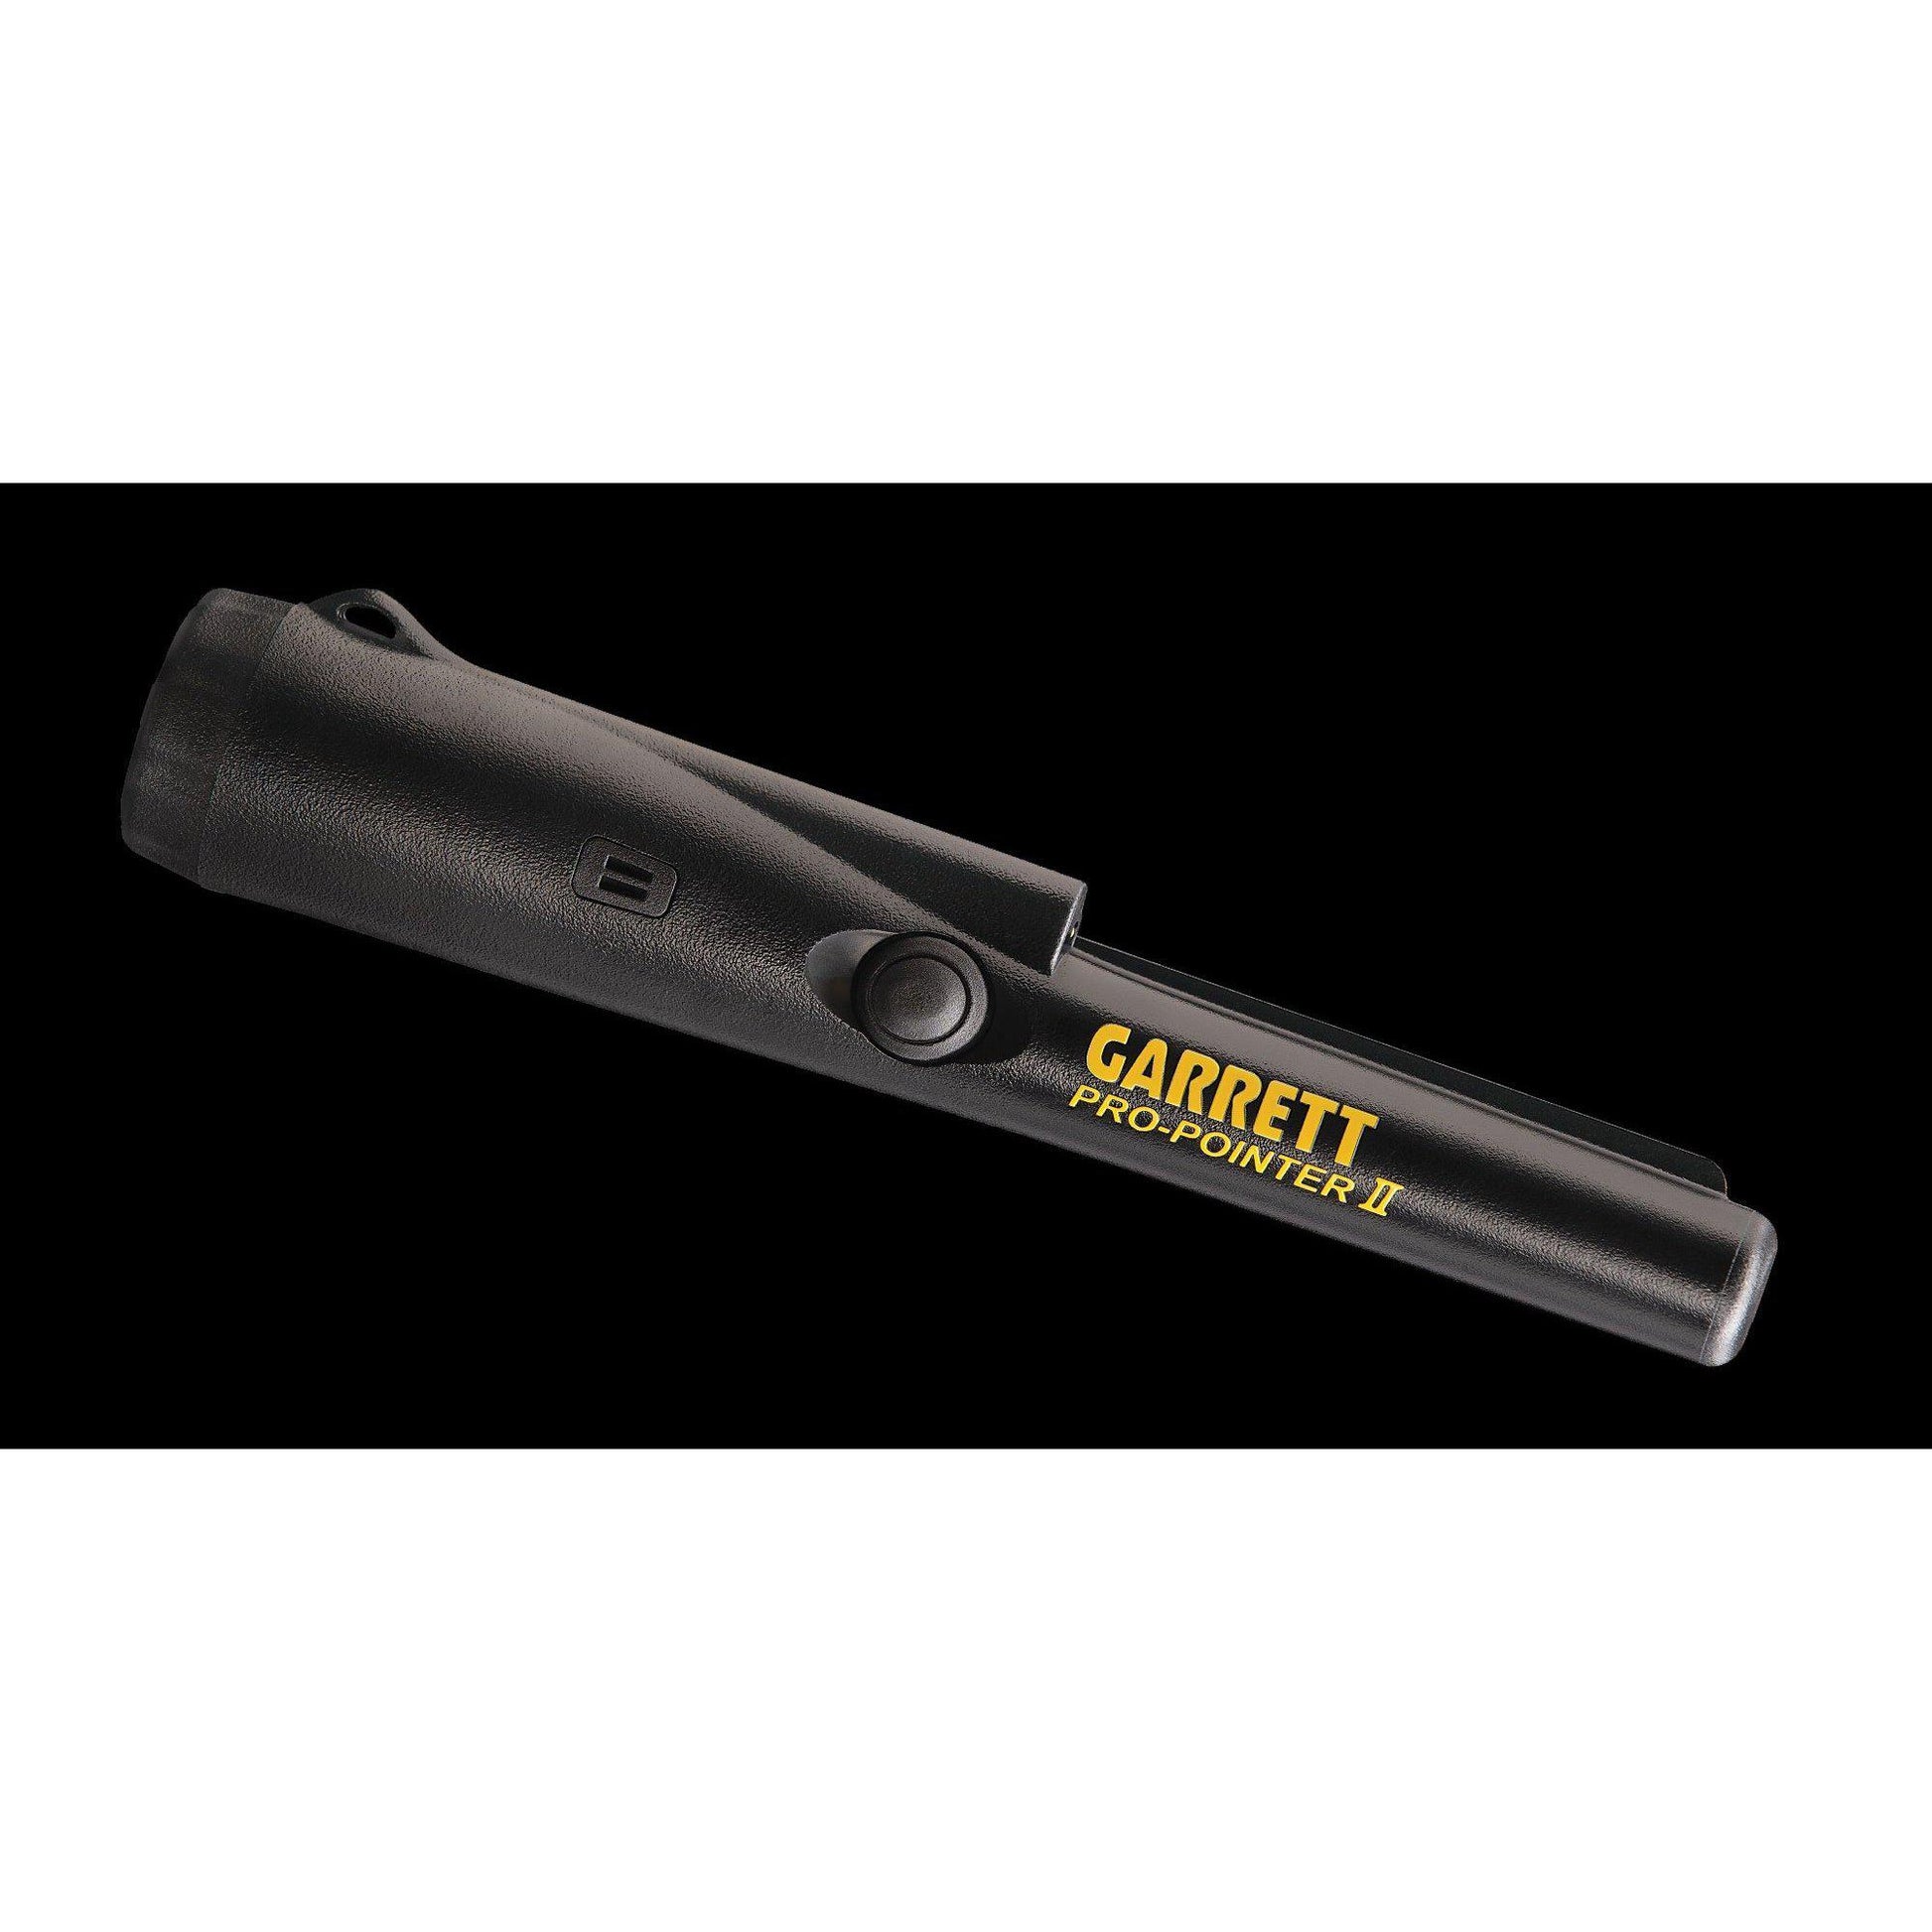 Garrett Pro-Pointer II Pinpointing Metal Detector, Shop, Features